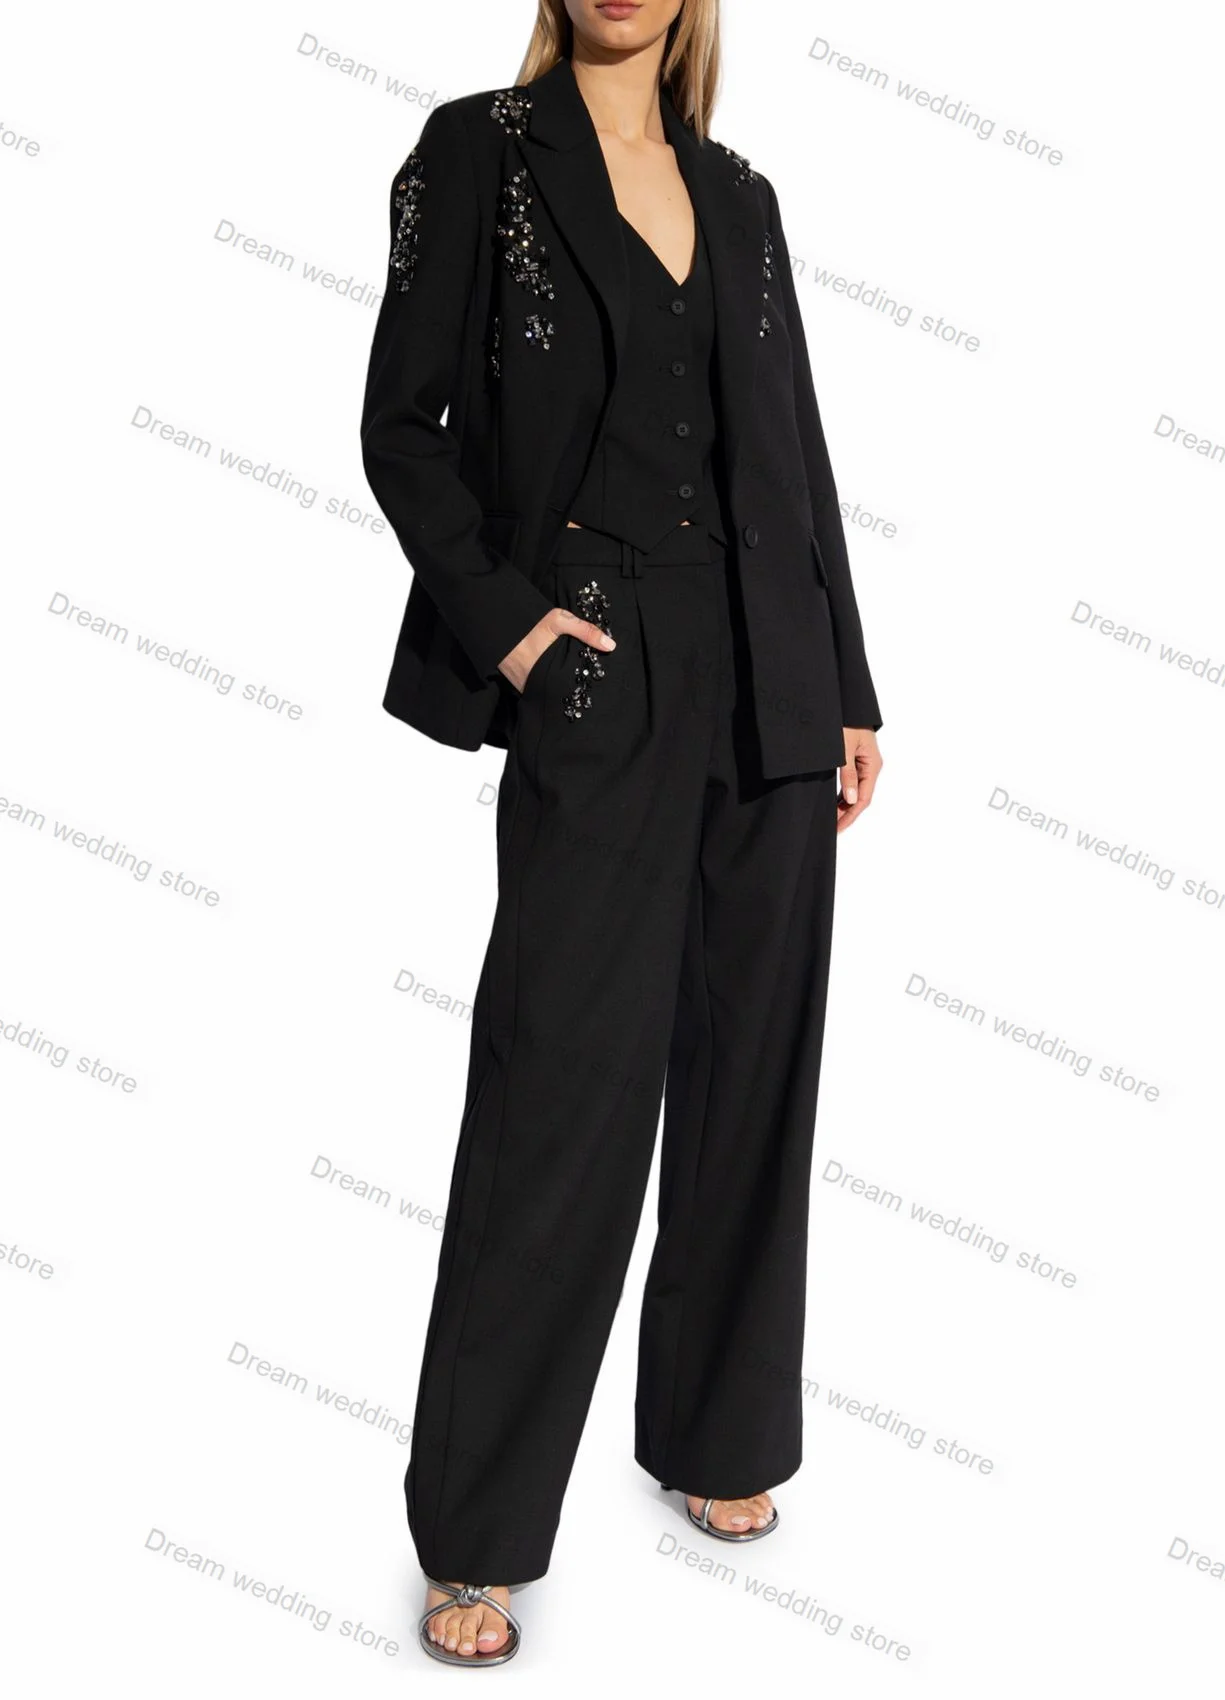 

2 Pieces Crystals Women Suits Black Blazer+Pants Designer Formal Office Lady Wedding Tuxedo Formal Office Jacket Tailored Coat